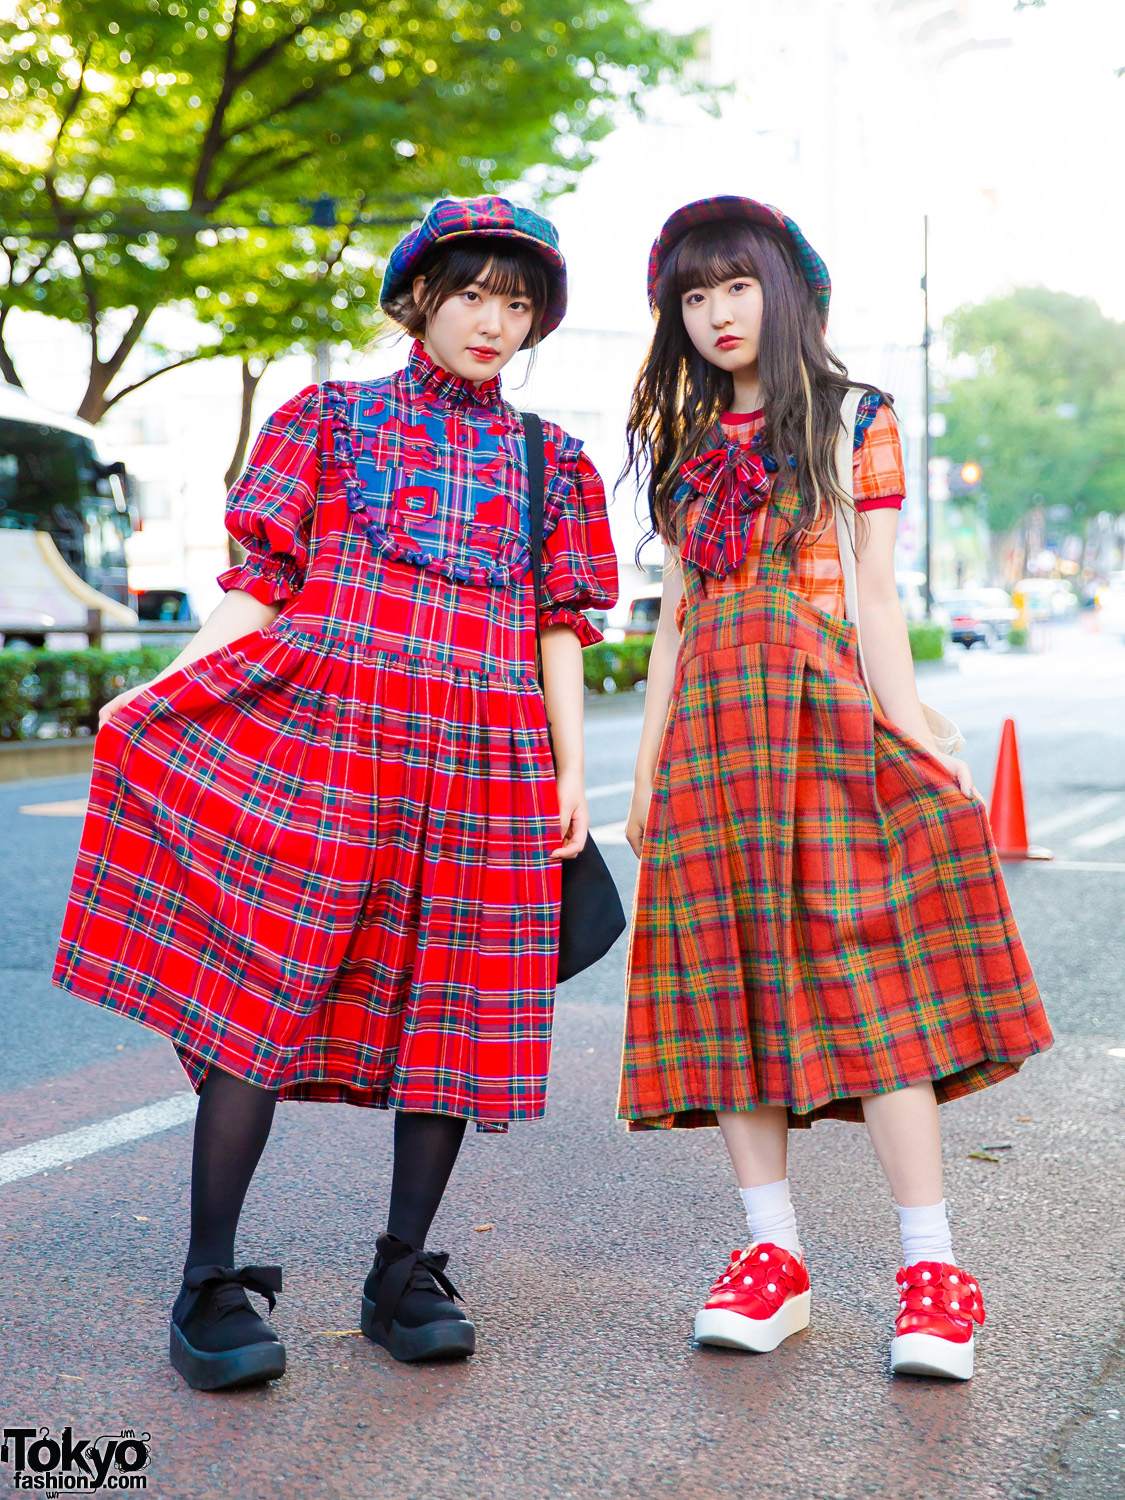 HEIHEI Harajuku Girls Plaid Street Styles w/ Ruffle Dress, Jumper Skirt & Tokyo Bopper Shoes